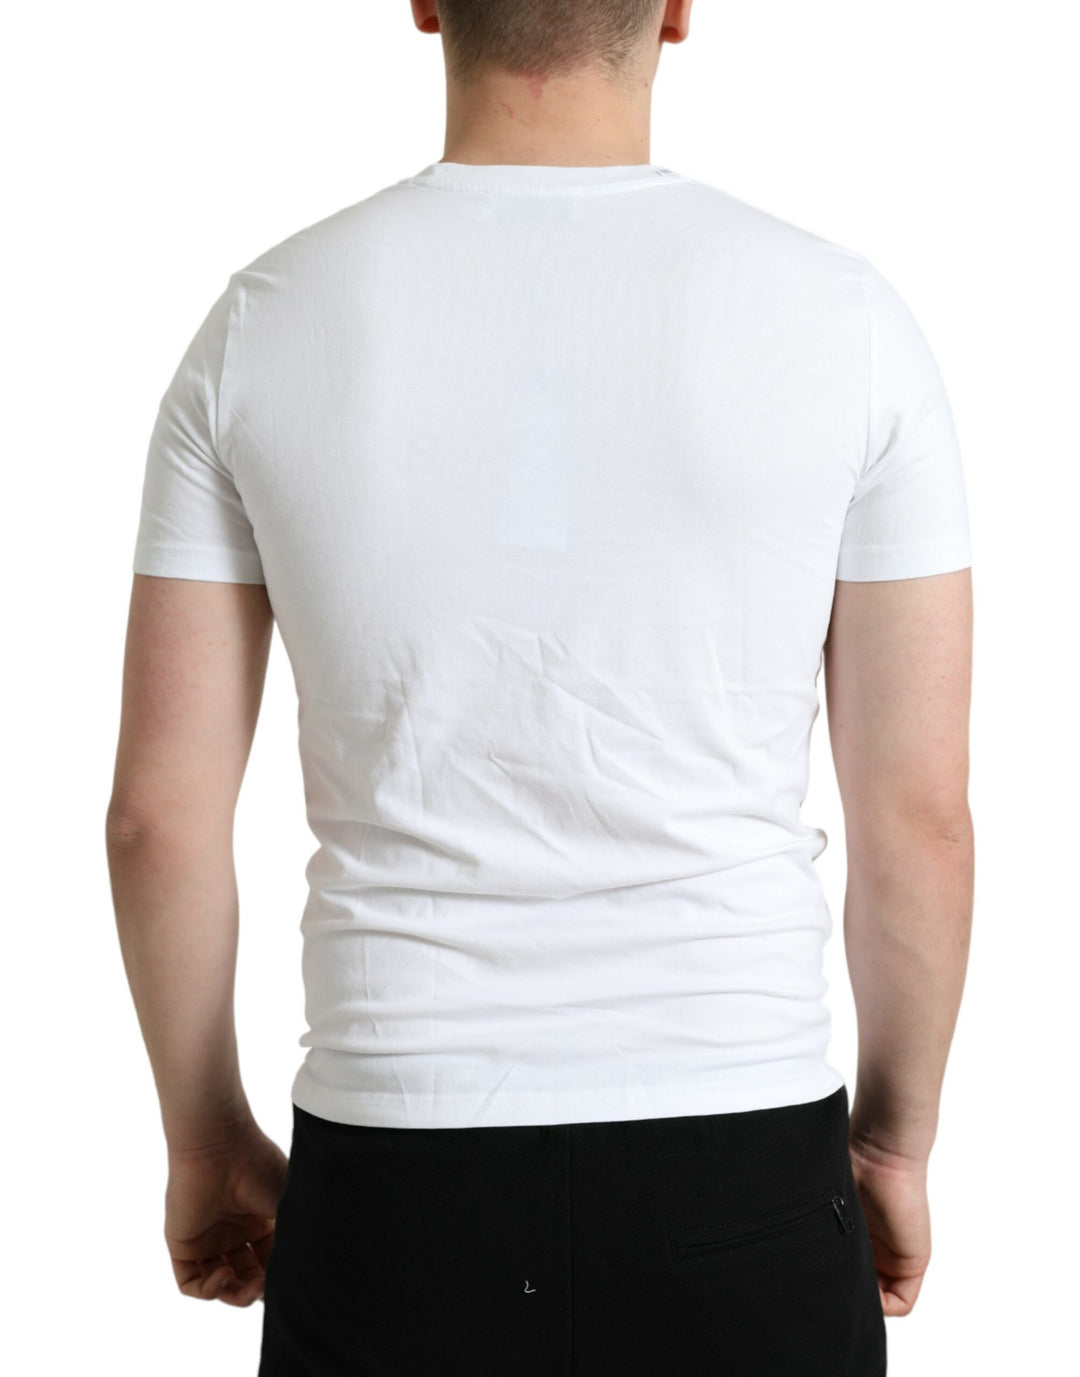 Dolce & Gabbana White Logo Print Cotton Round Neck T-shirt